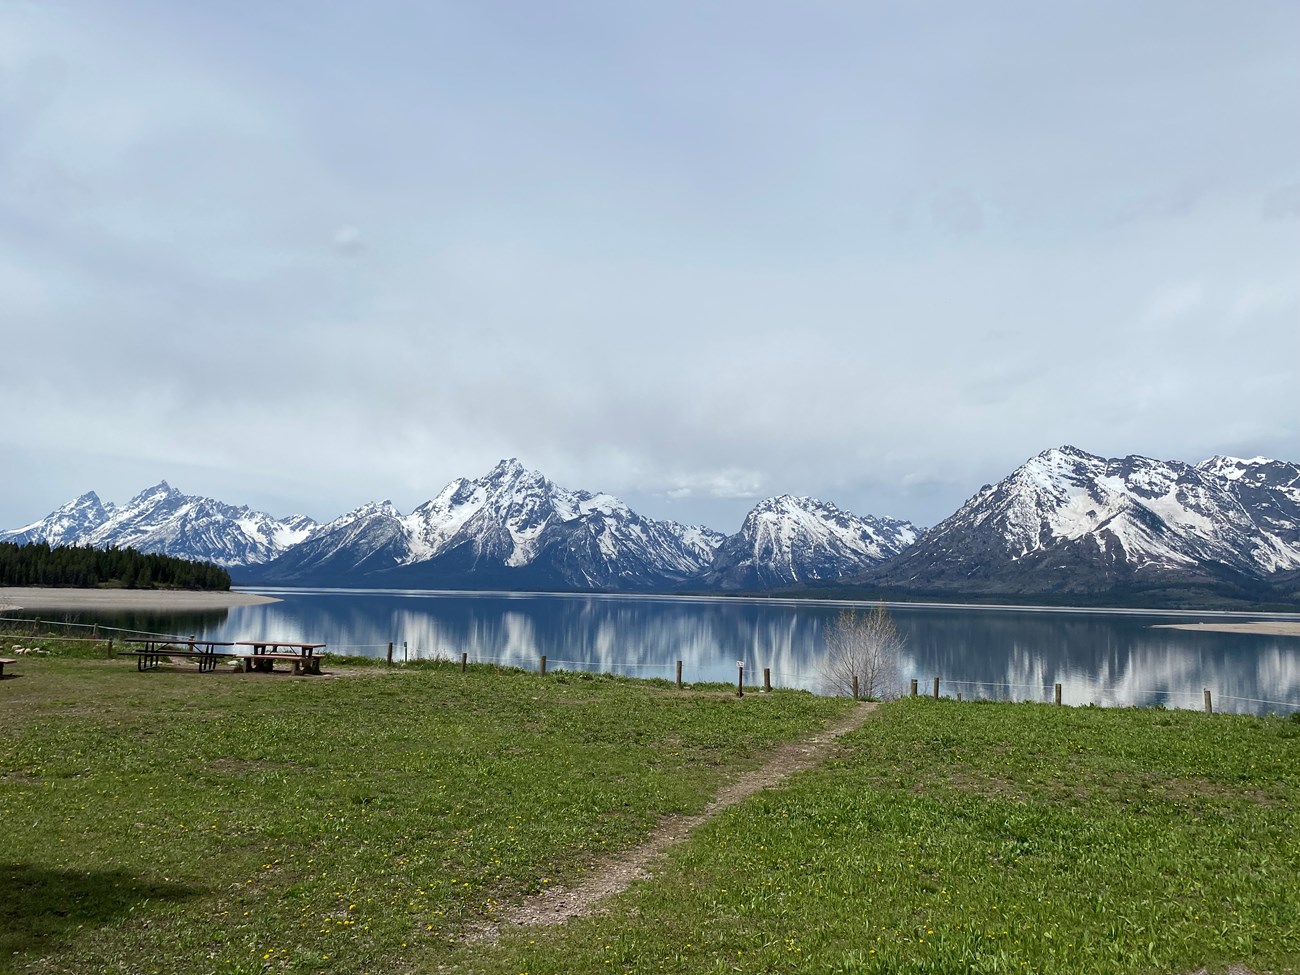 View of Teton range across Jackson Lake